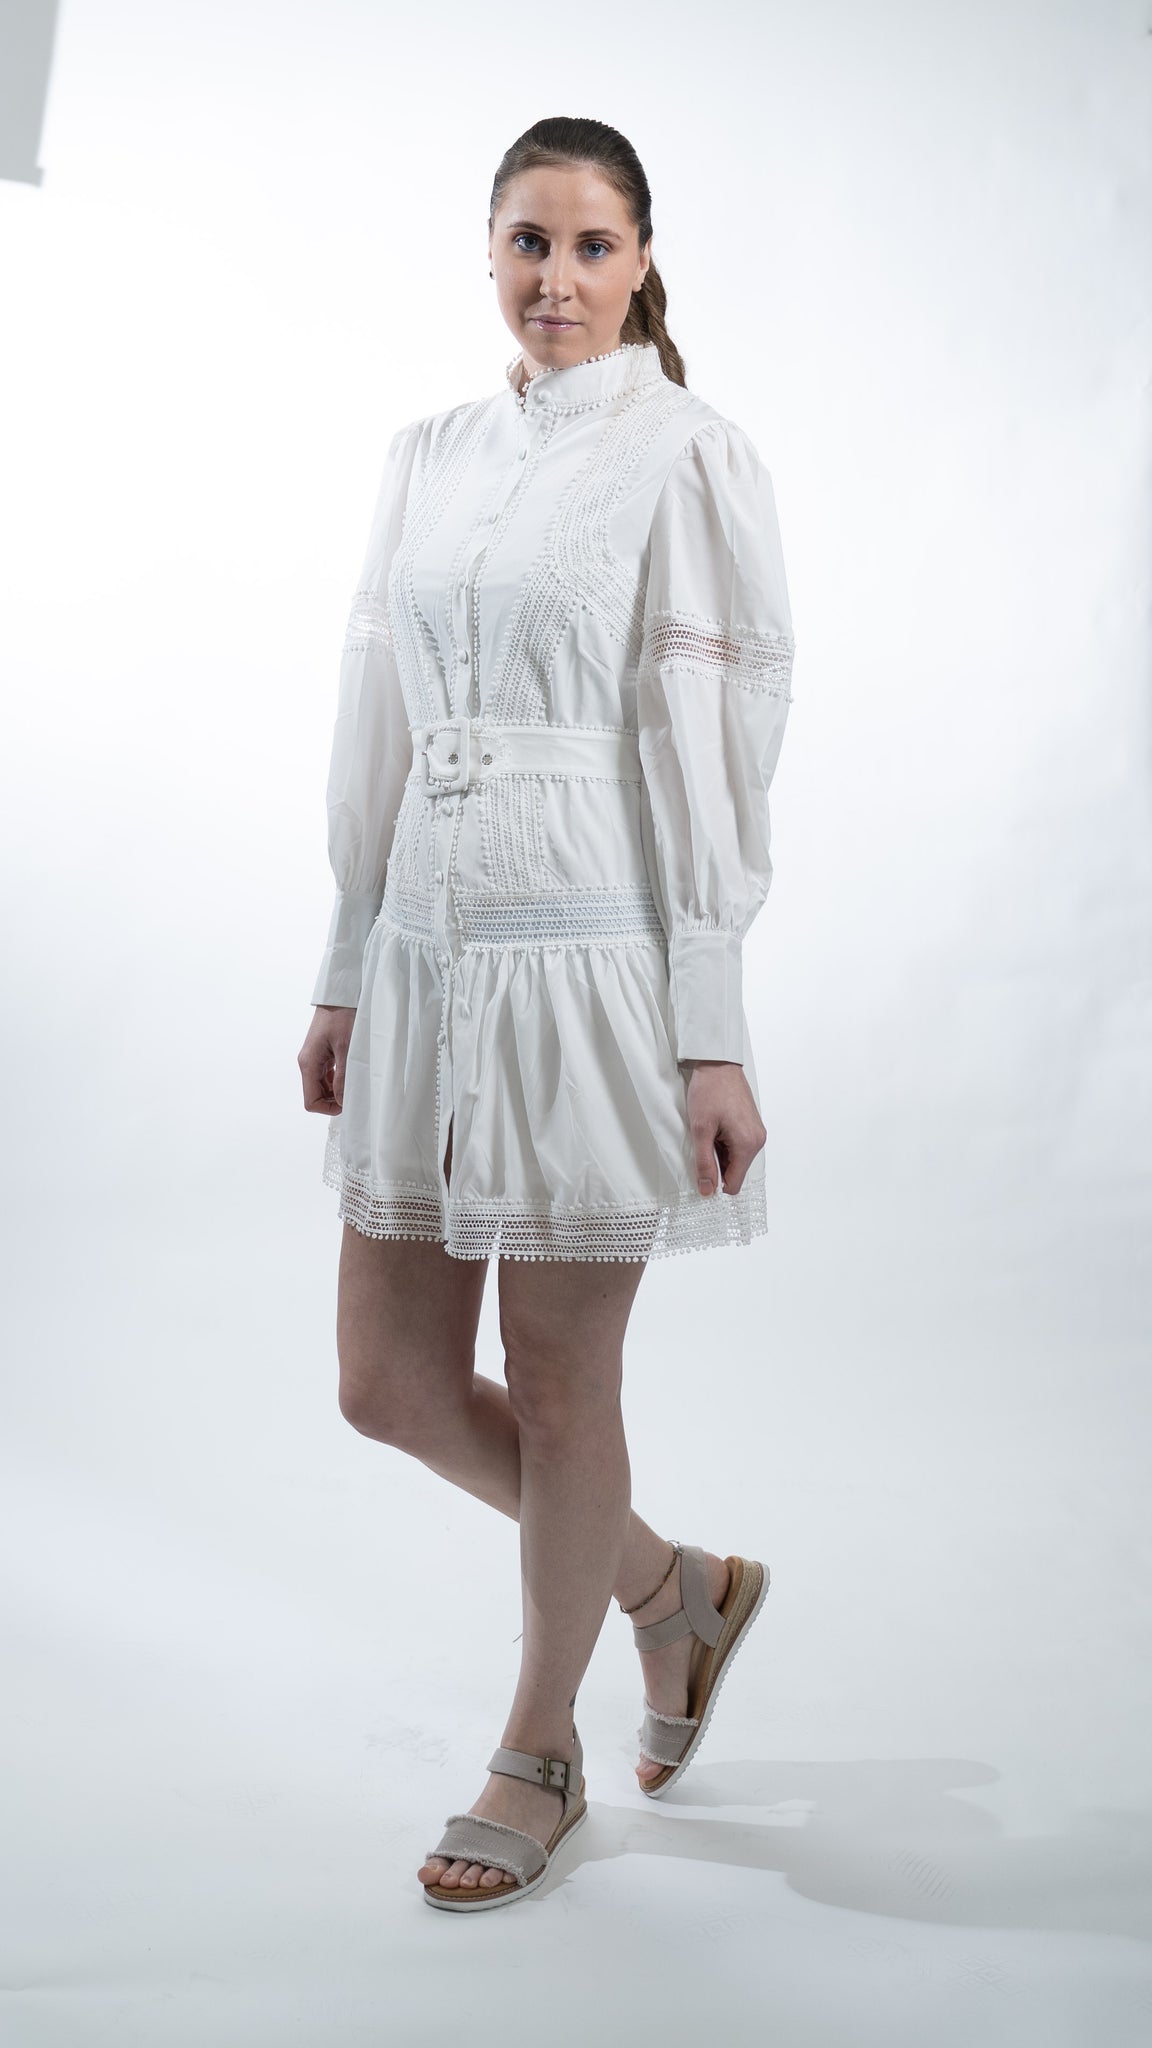 White Heaven - Dress